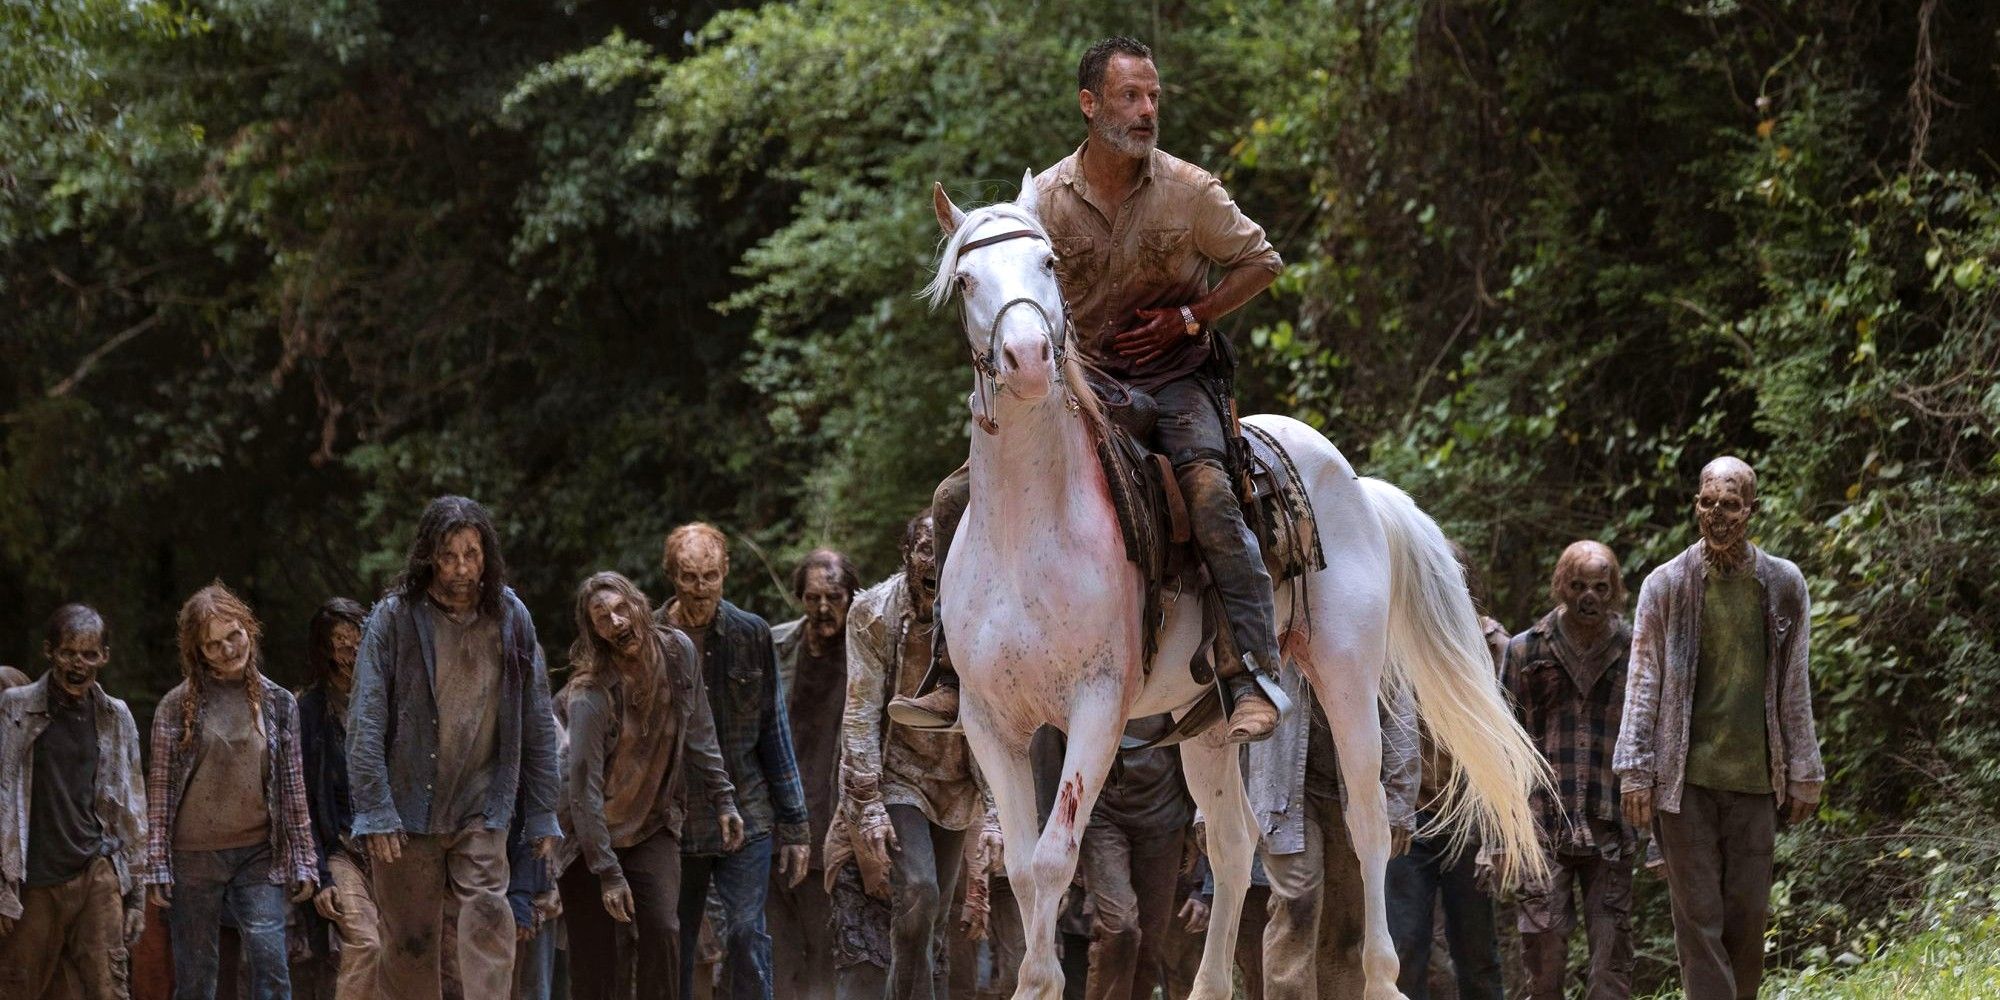 Andrew Lincoln as Rick Grimes in The Walking Dead Bridge Scene